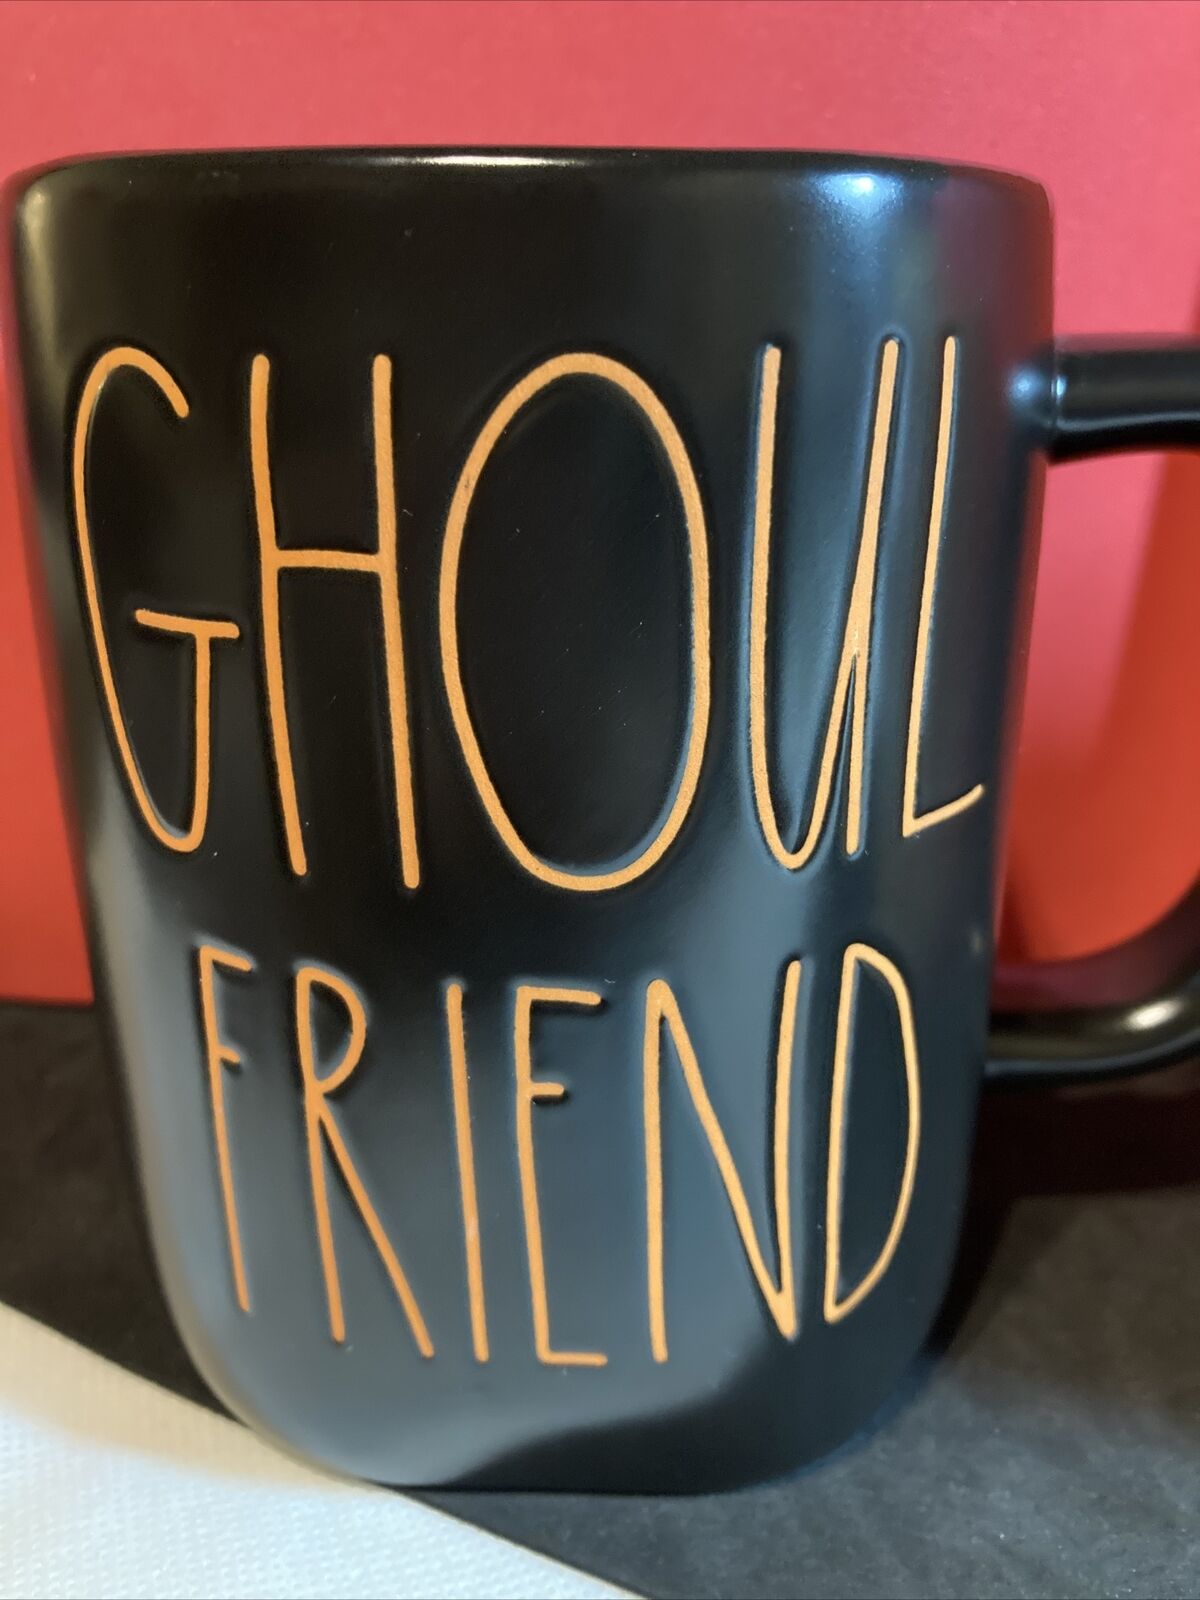 rae dunn ghoul friend halloween mug cup 4.75” H